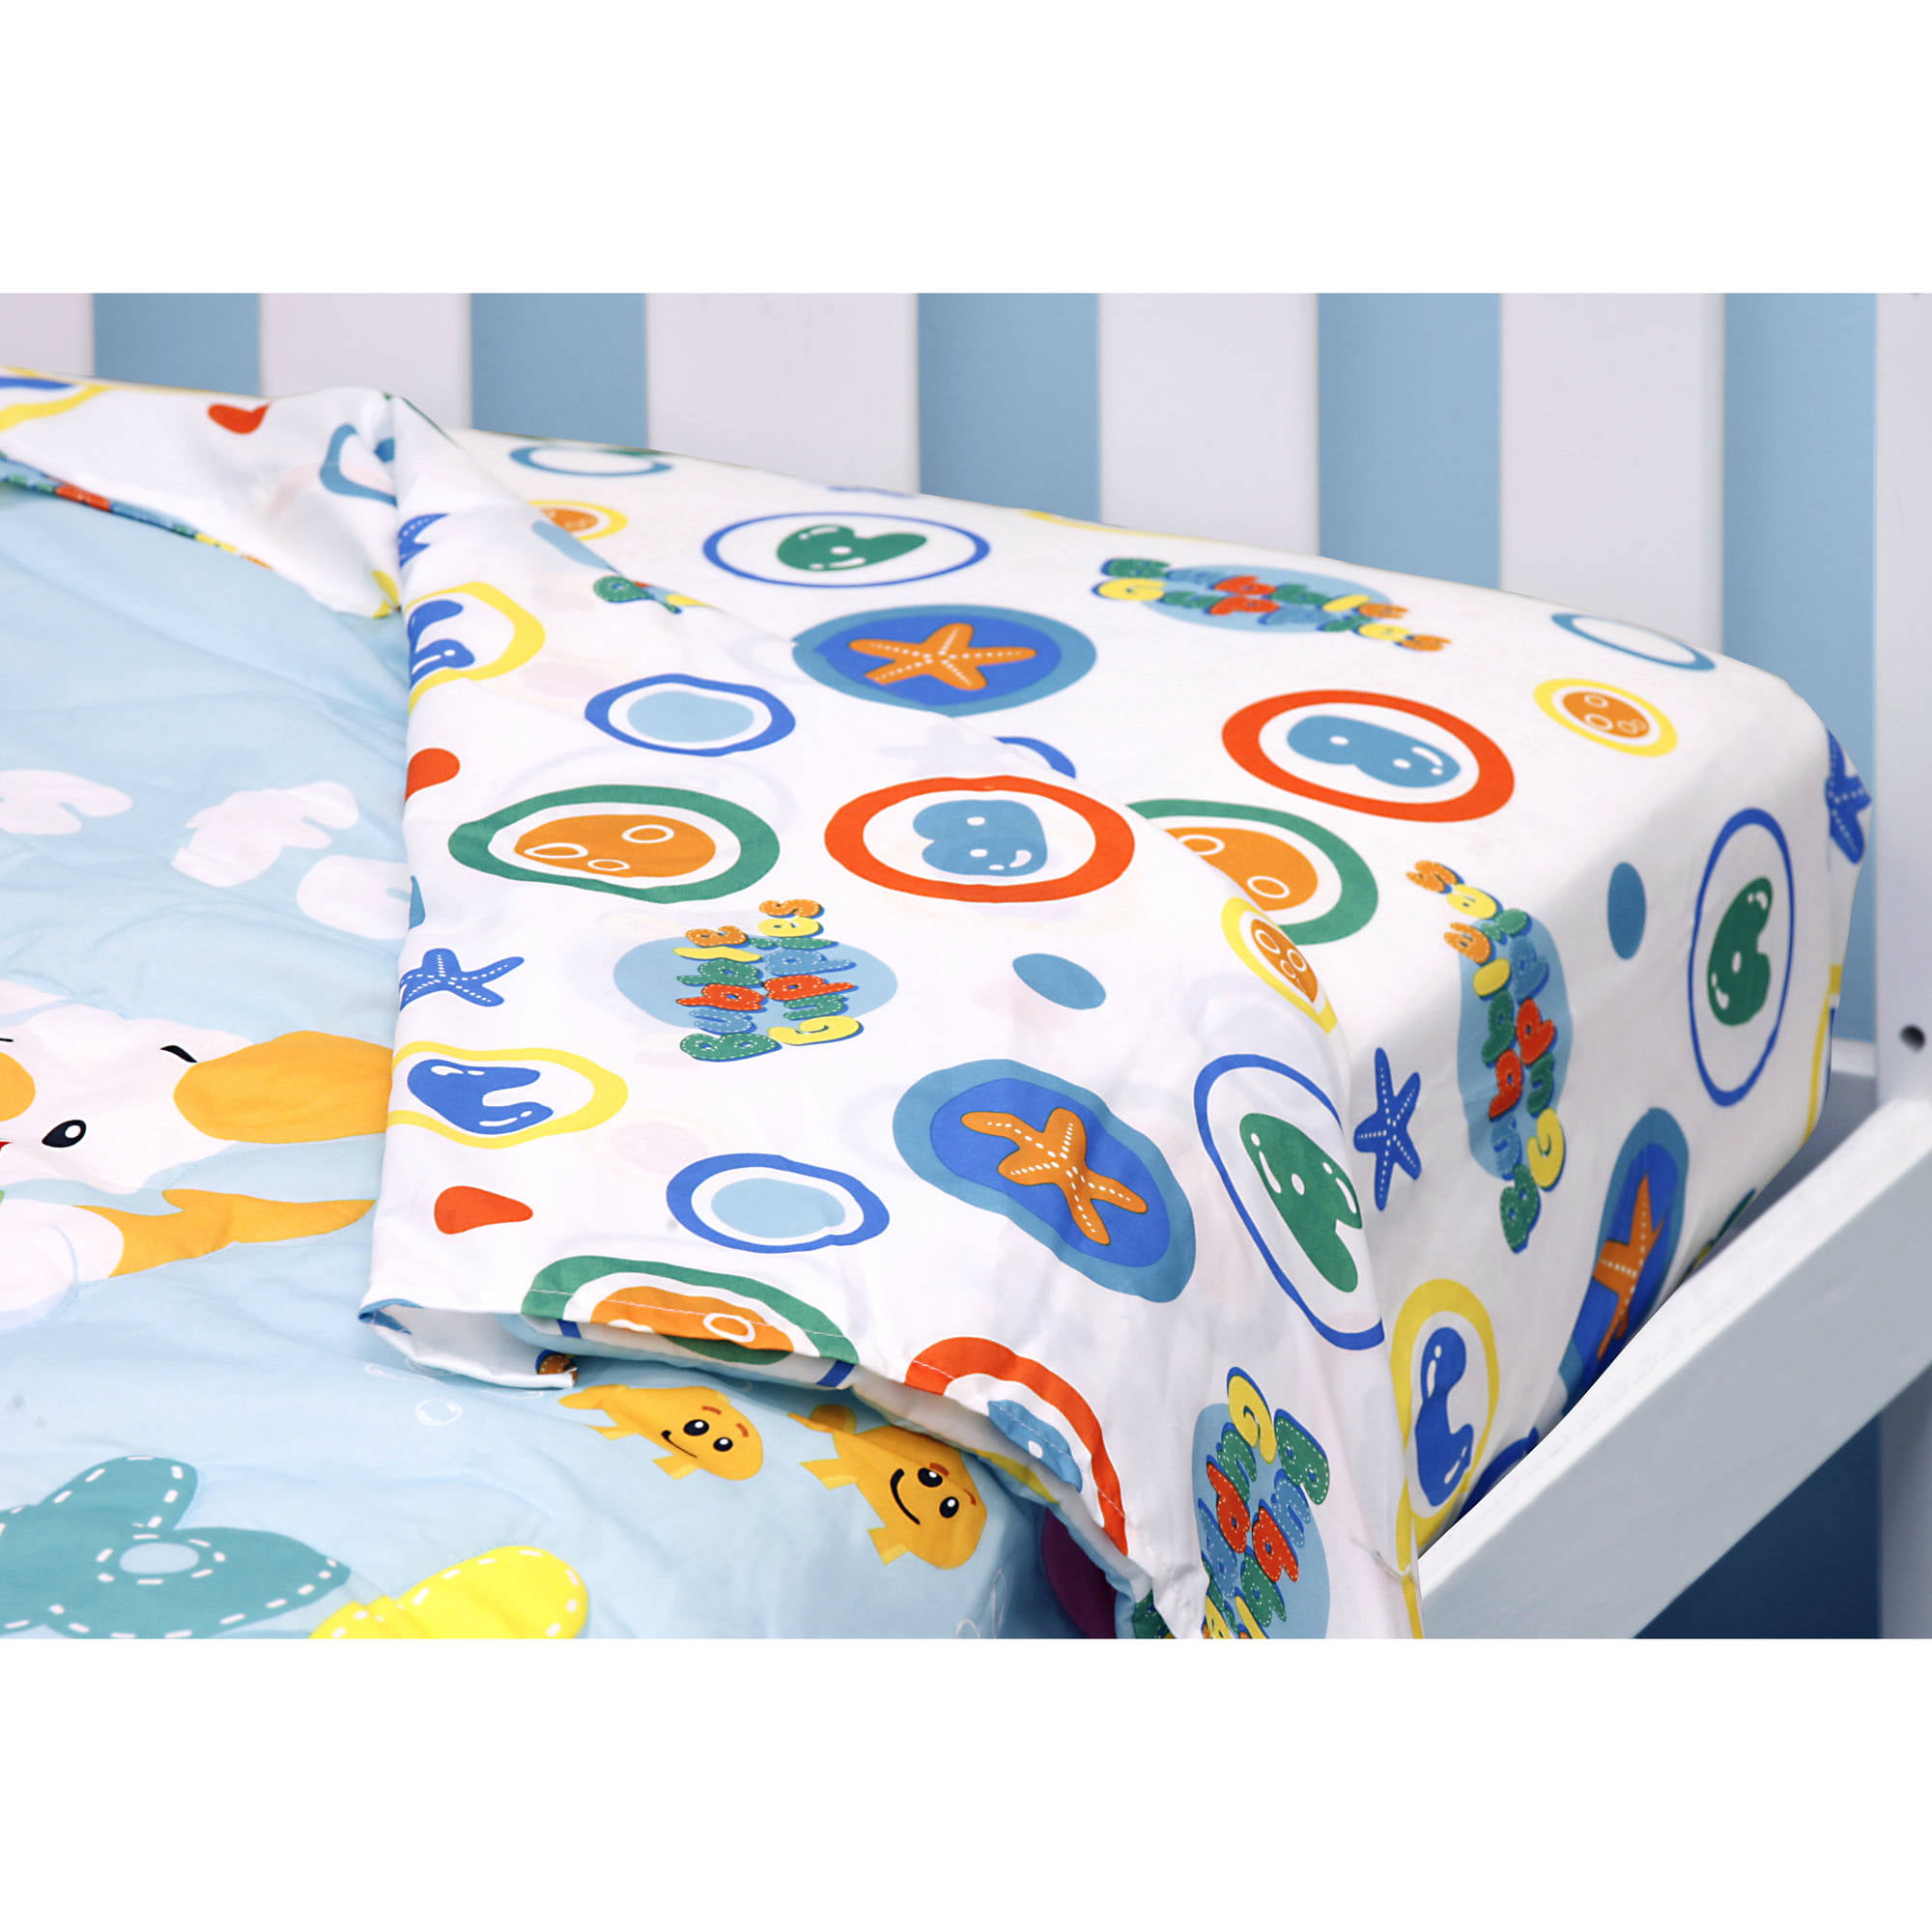 Bubble Guppies Toddler Bed Set With Bonu - Walmart.com - 